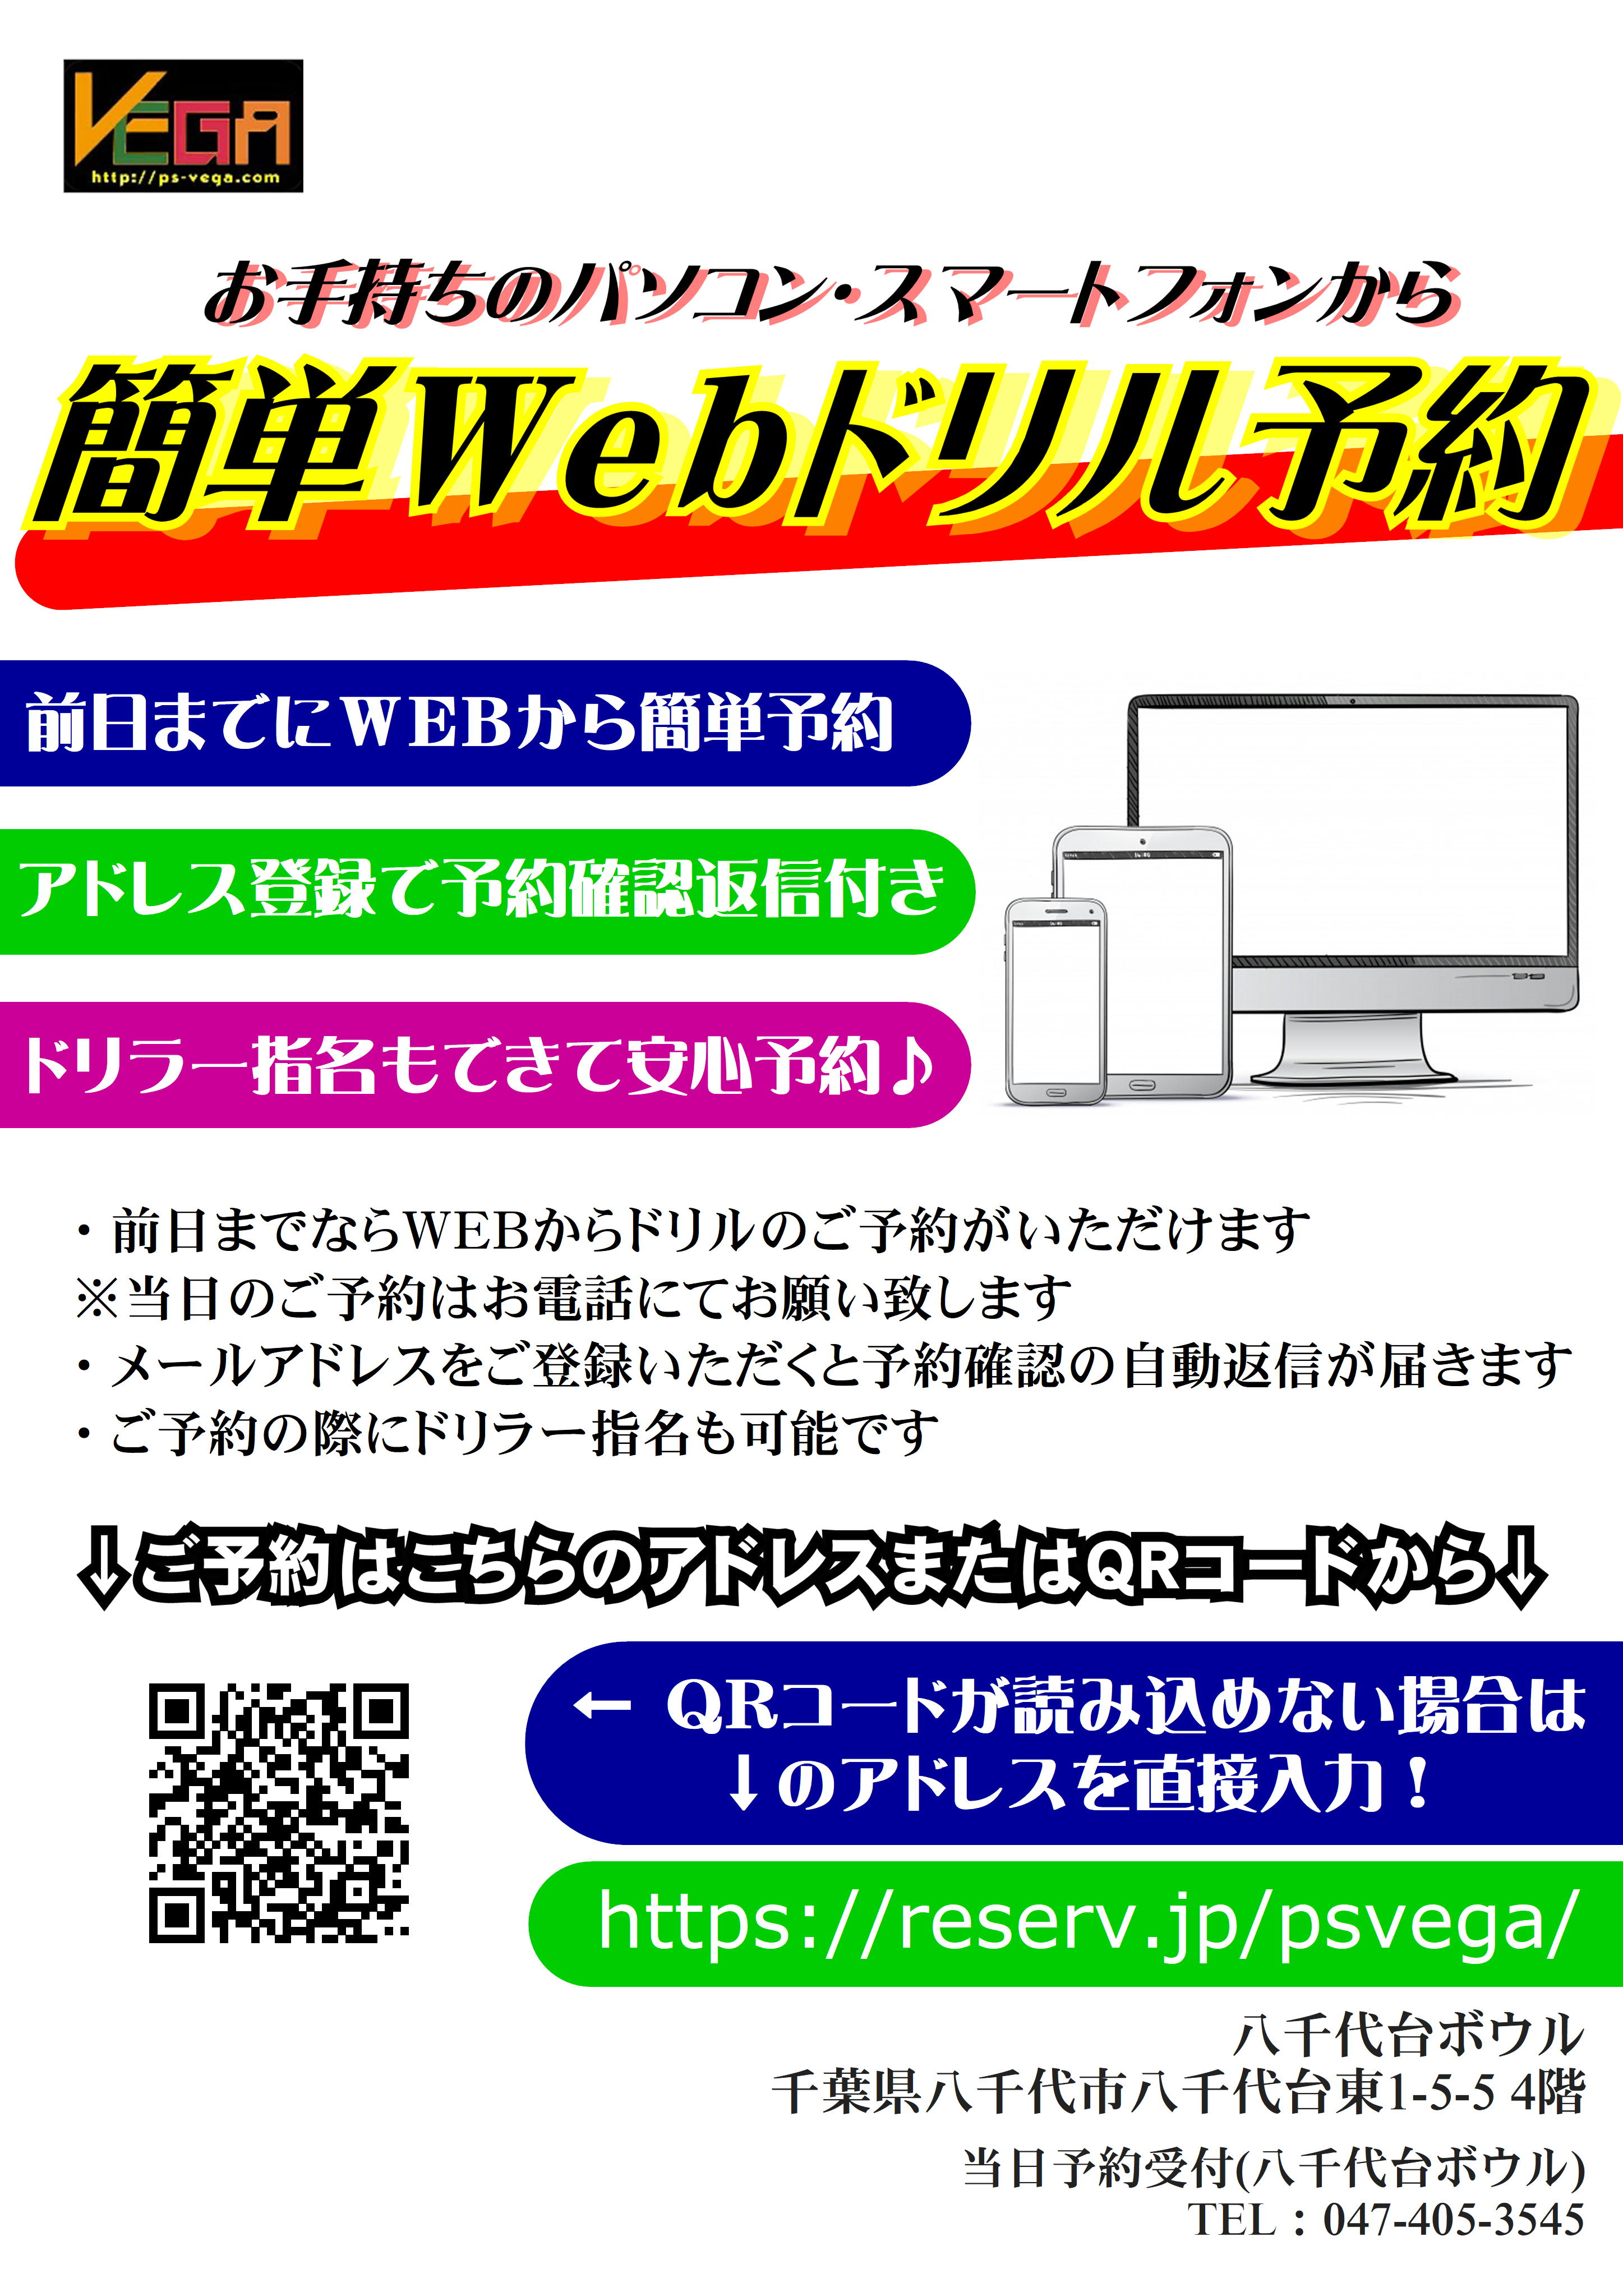 web_reserve.jpg